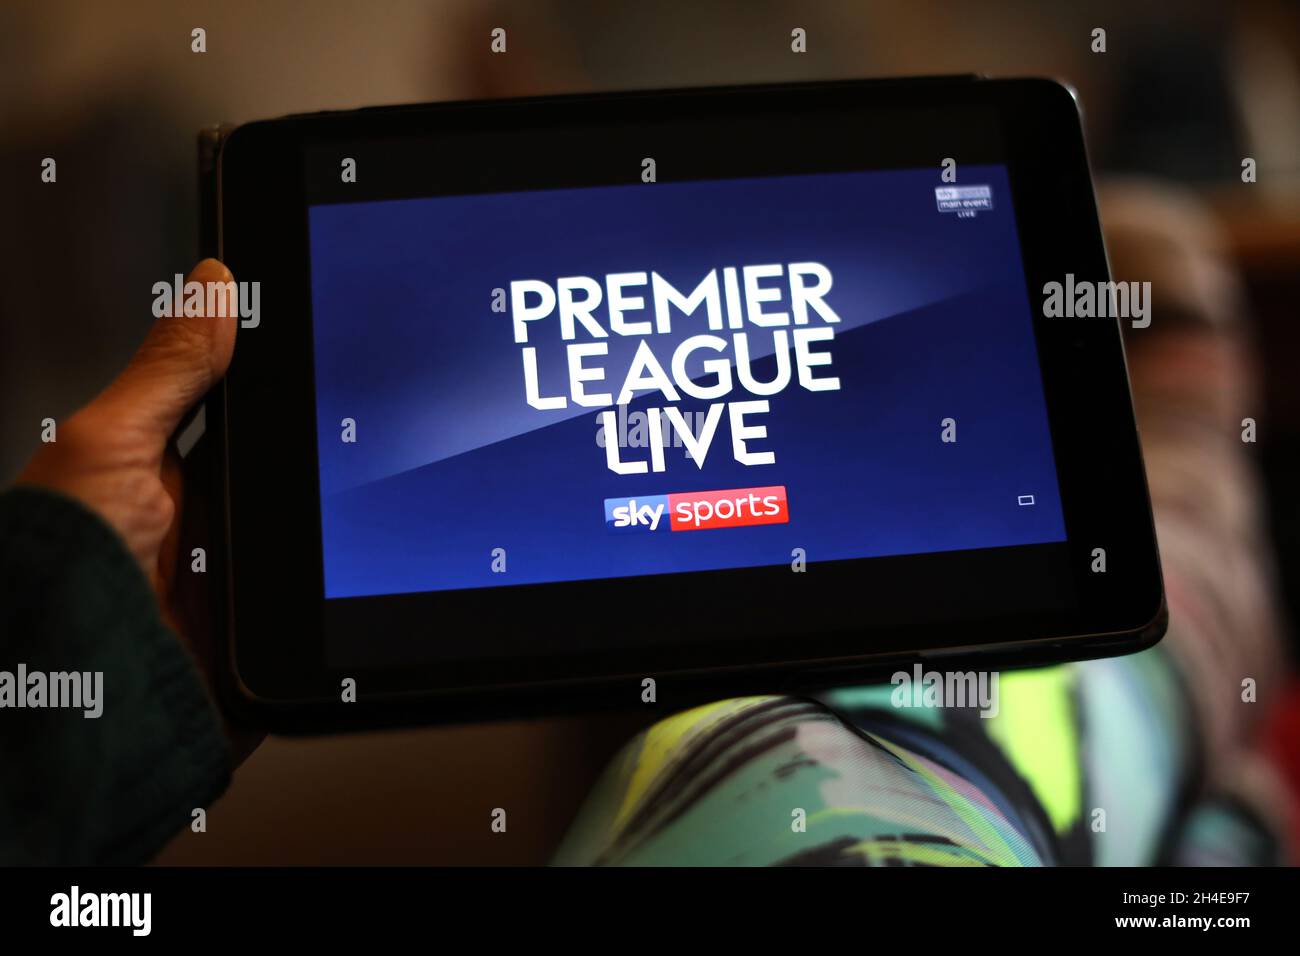 A tablet screening Premier League Live on Sky Sports